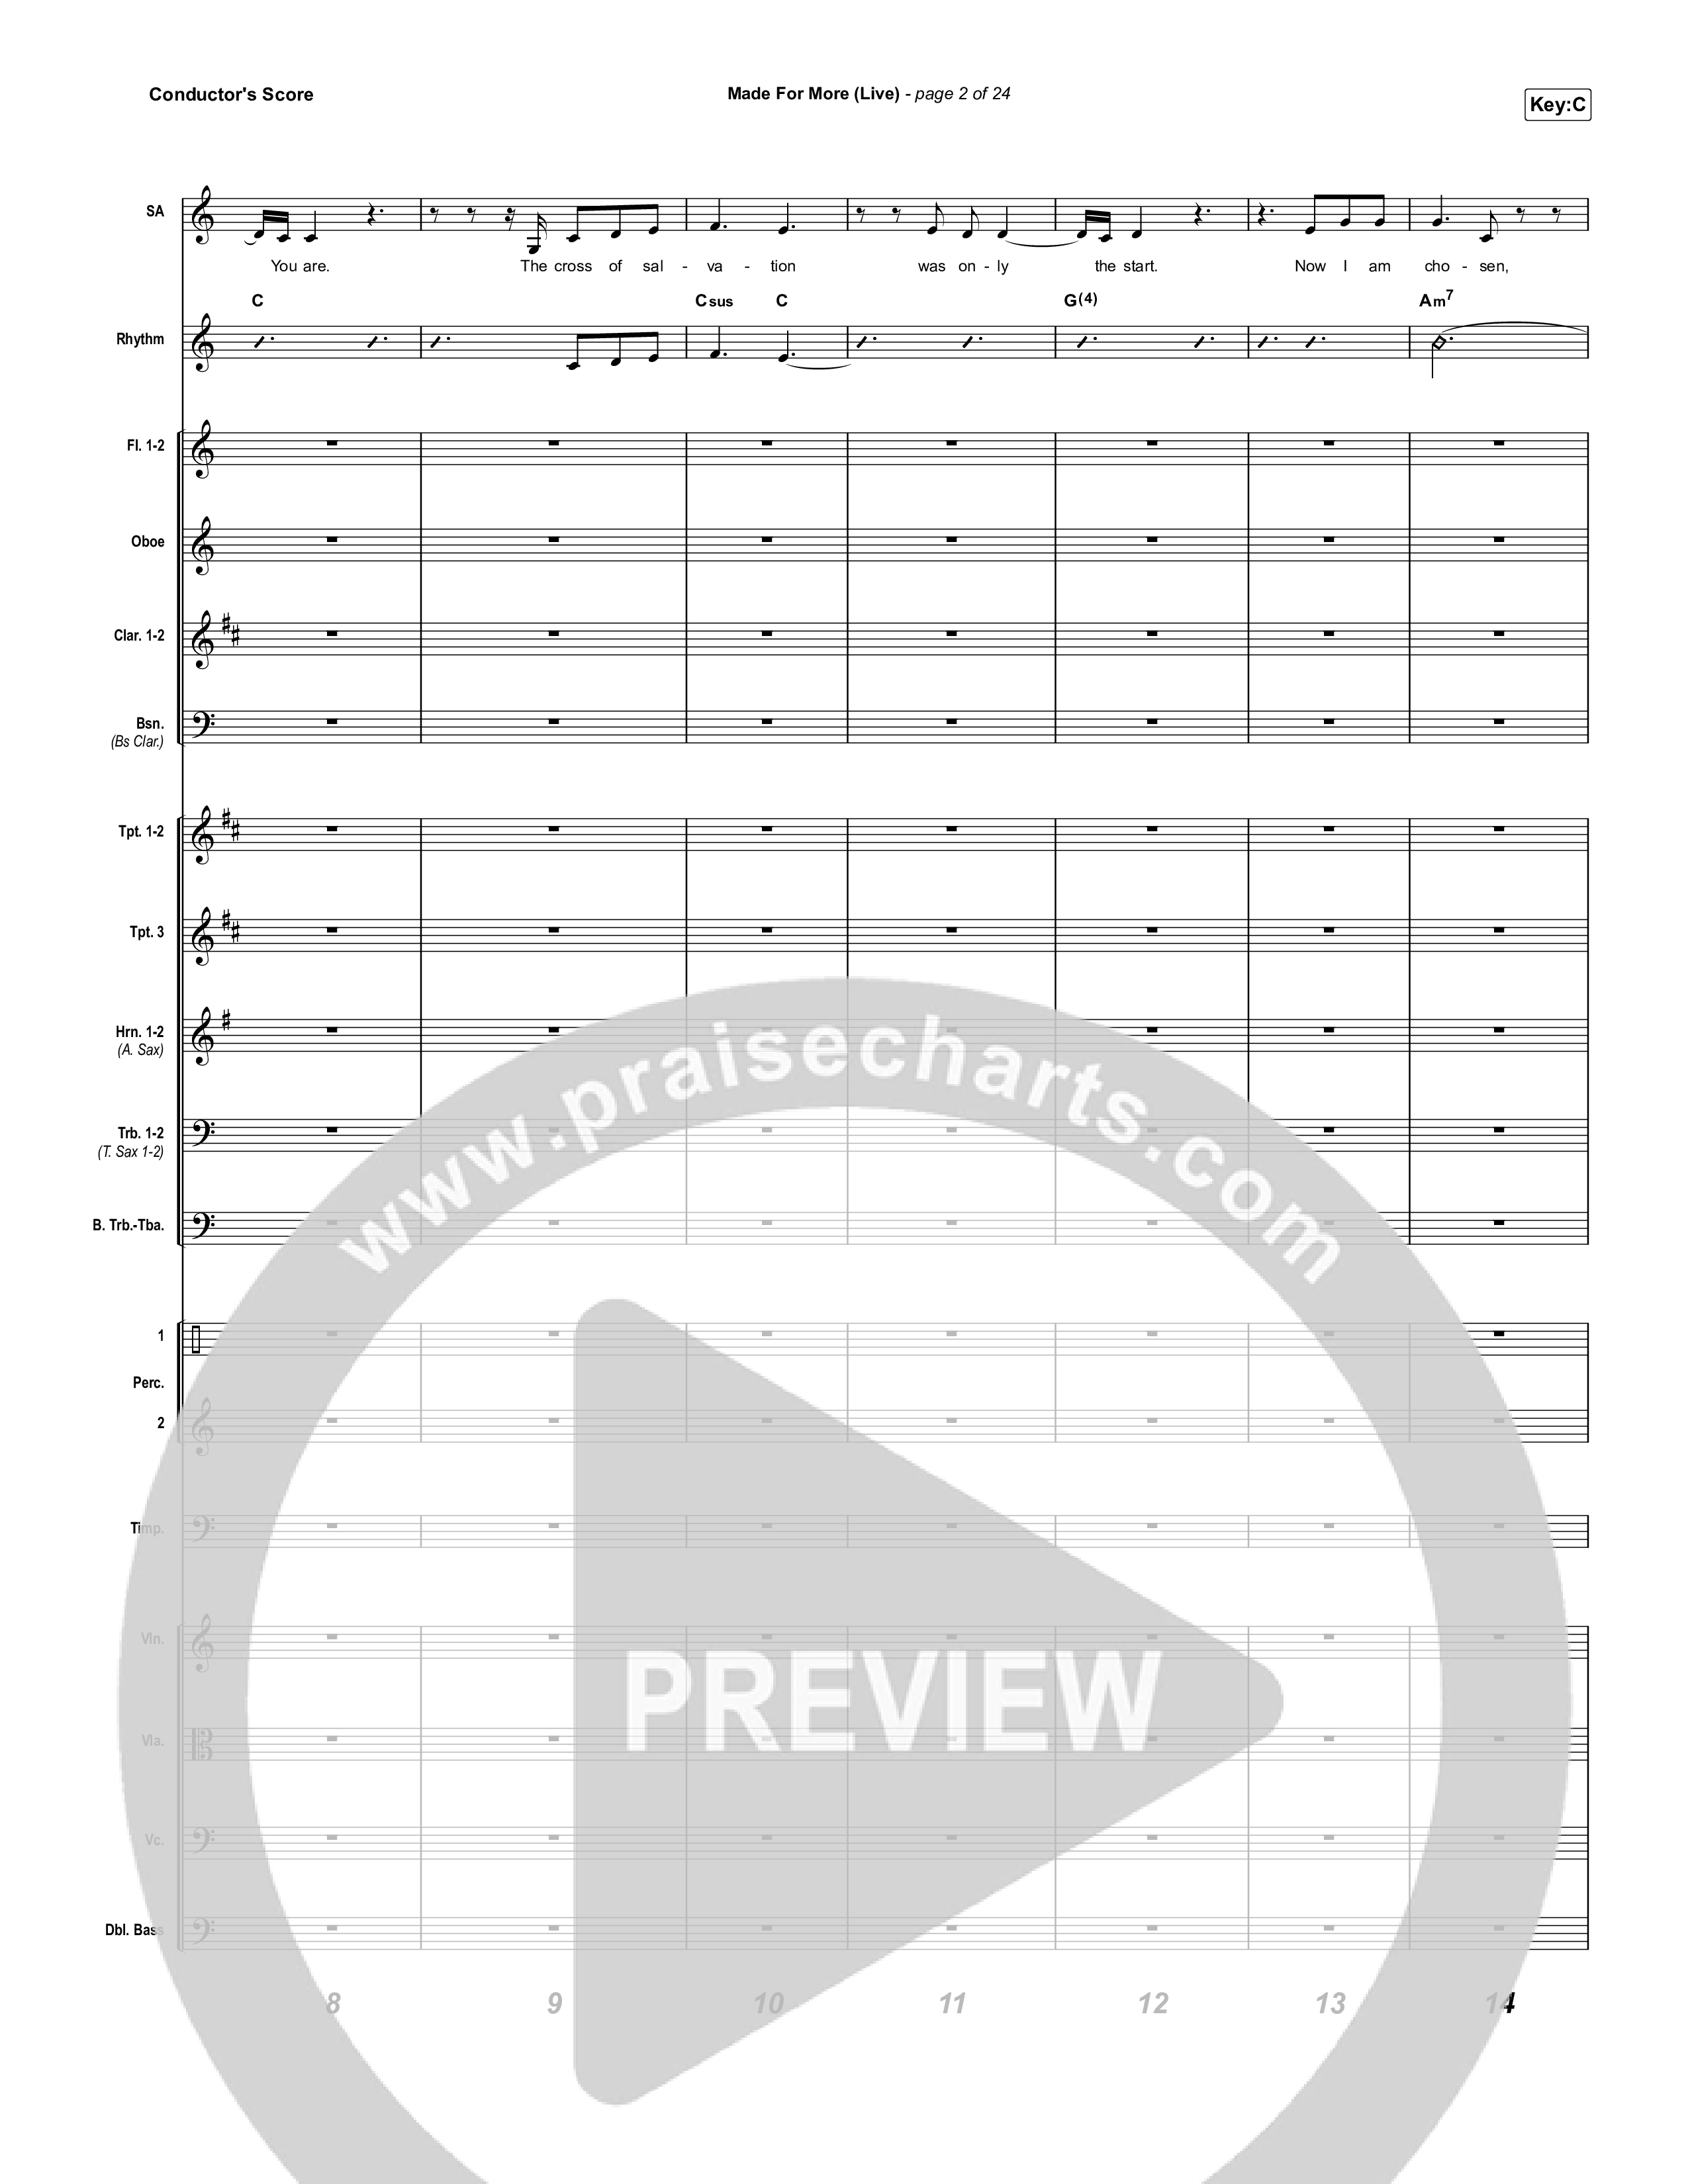 Made For More (Choral Anthem SATB) Orchestration (Josh Baldwin / Jenn Johnson / Arr. Luke Gambill)